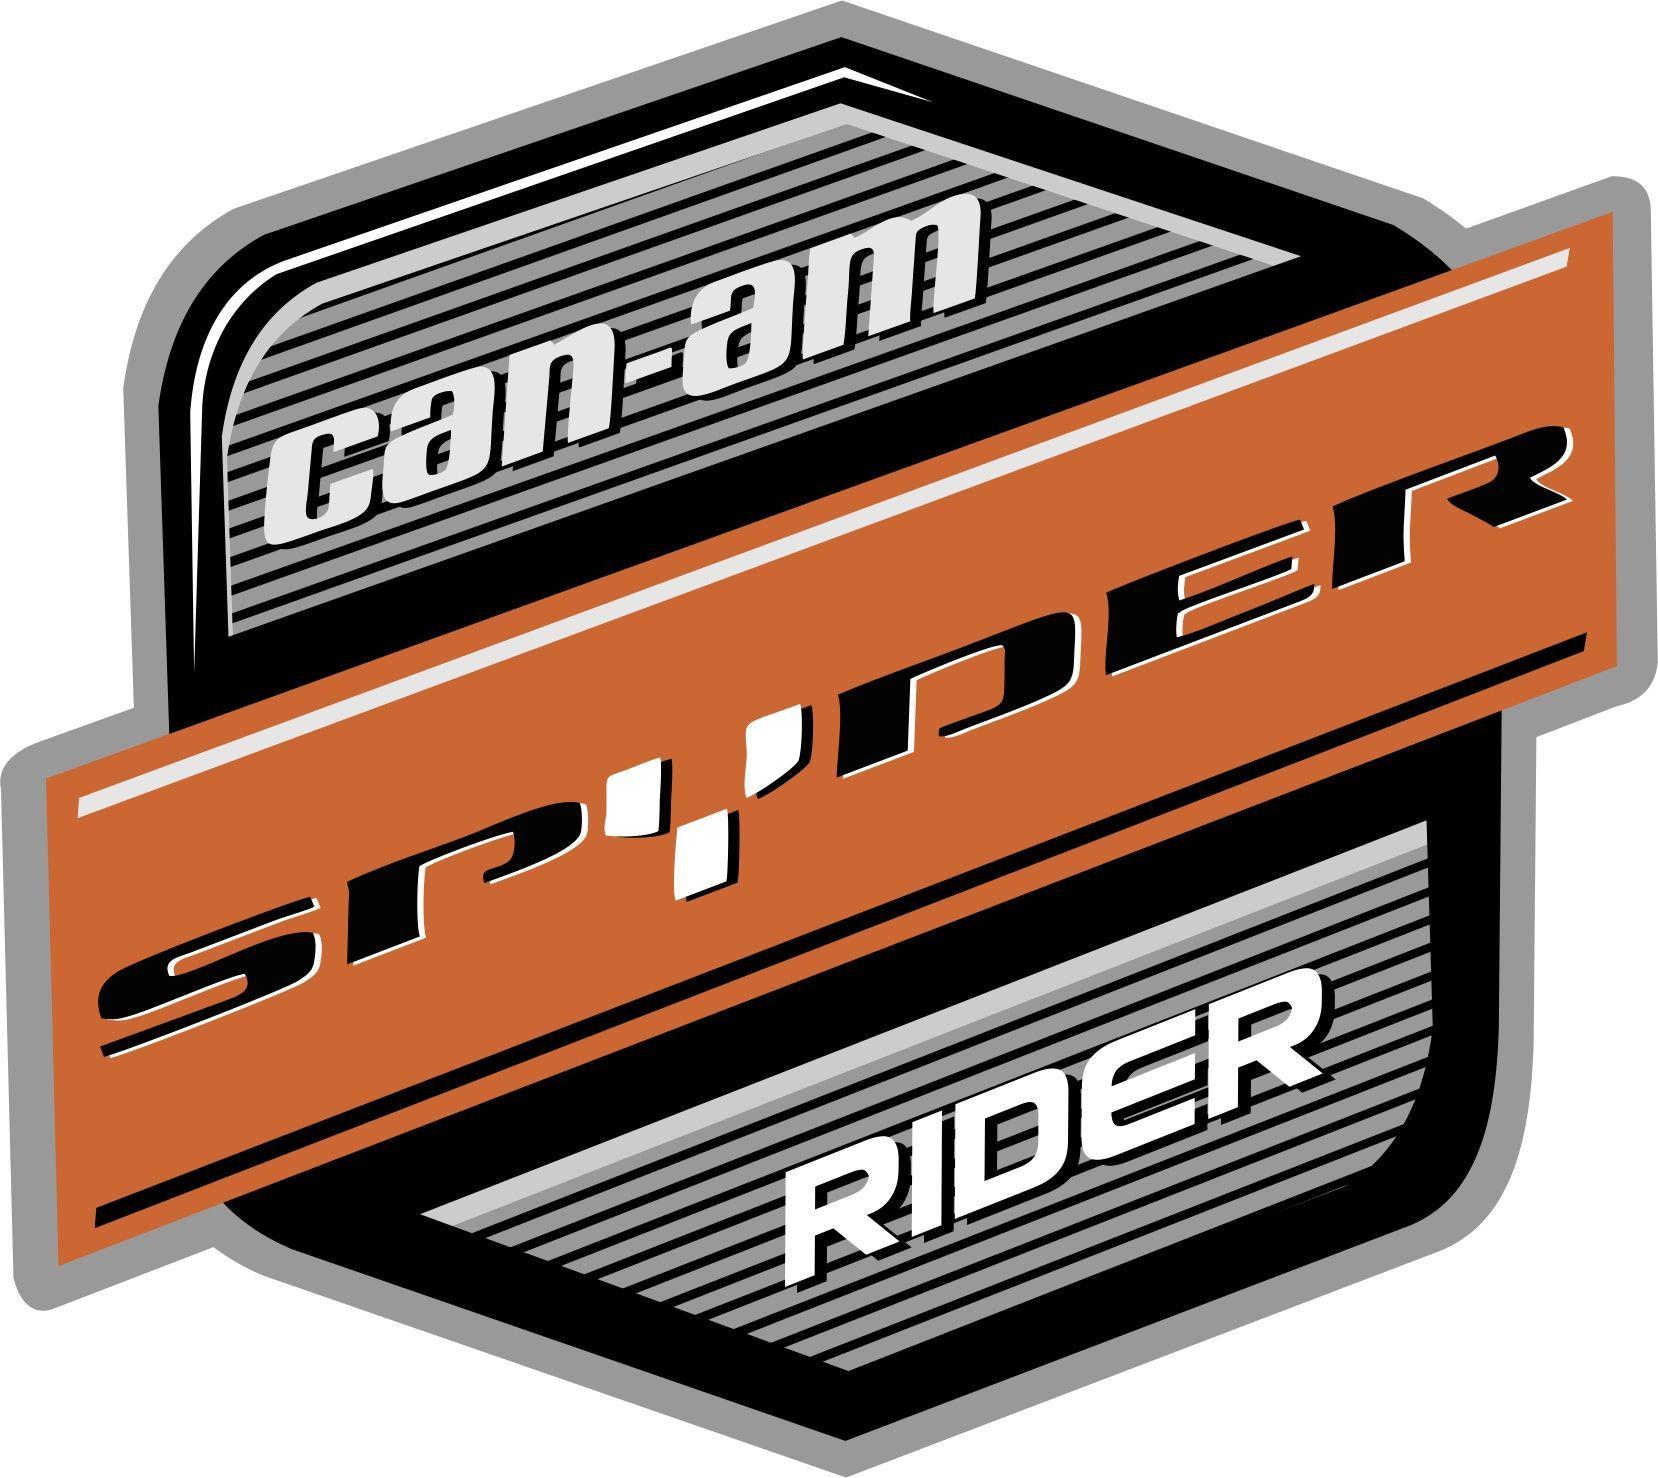 BRP Logo - Can Am Spyder Rider Logo Emblem #fanart #logo #graphicdesign #canam